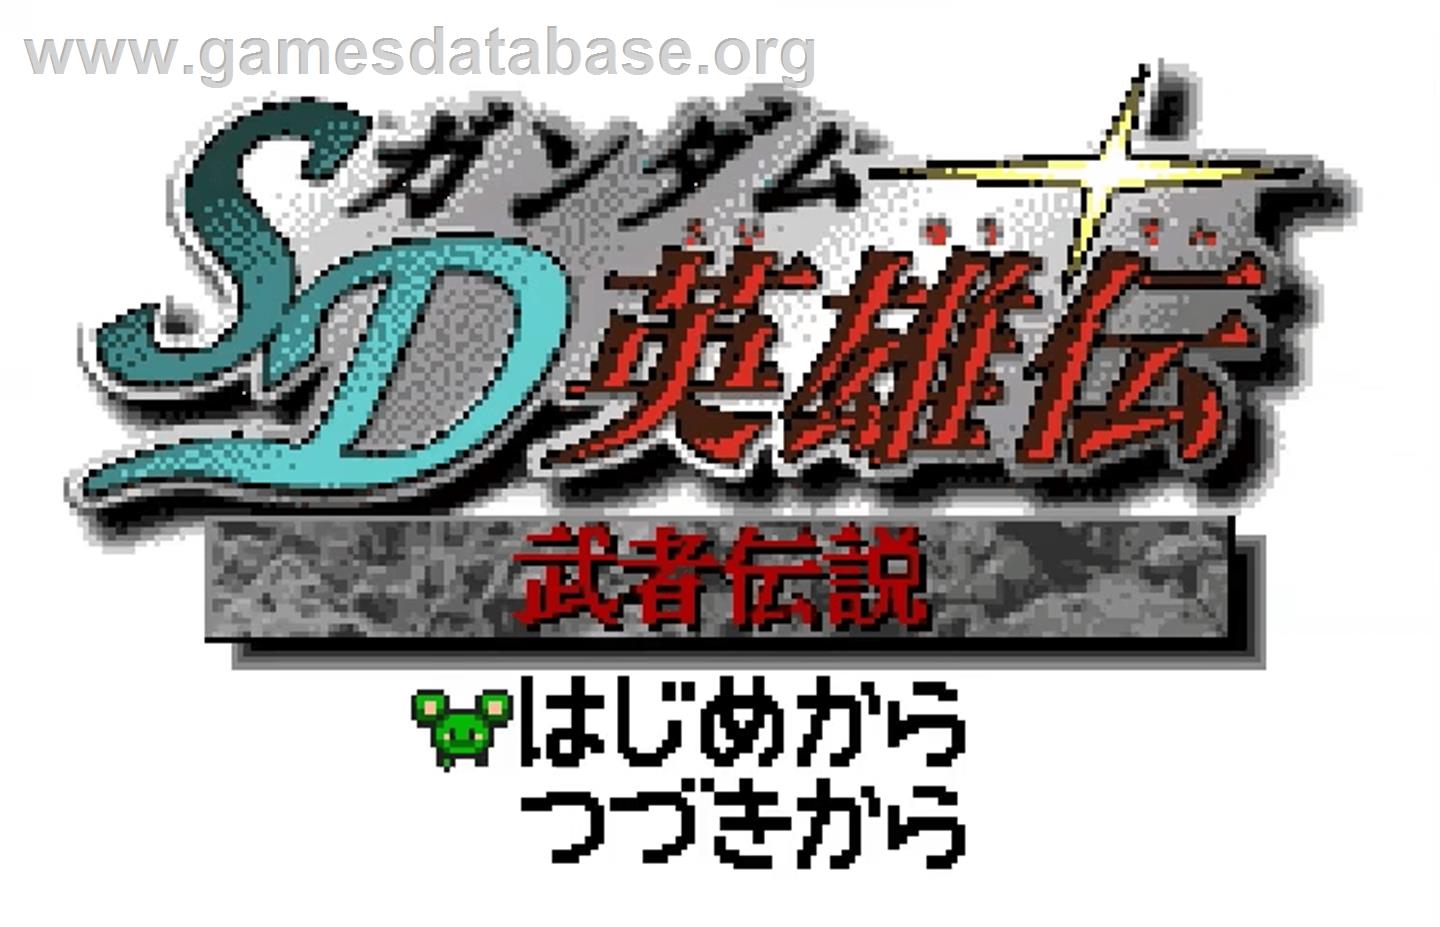 SD Gundam: Warrior Legend - Bandai WonderSwan Color - Artwork - Title Screen